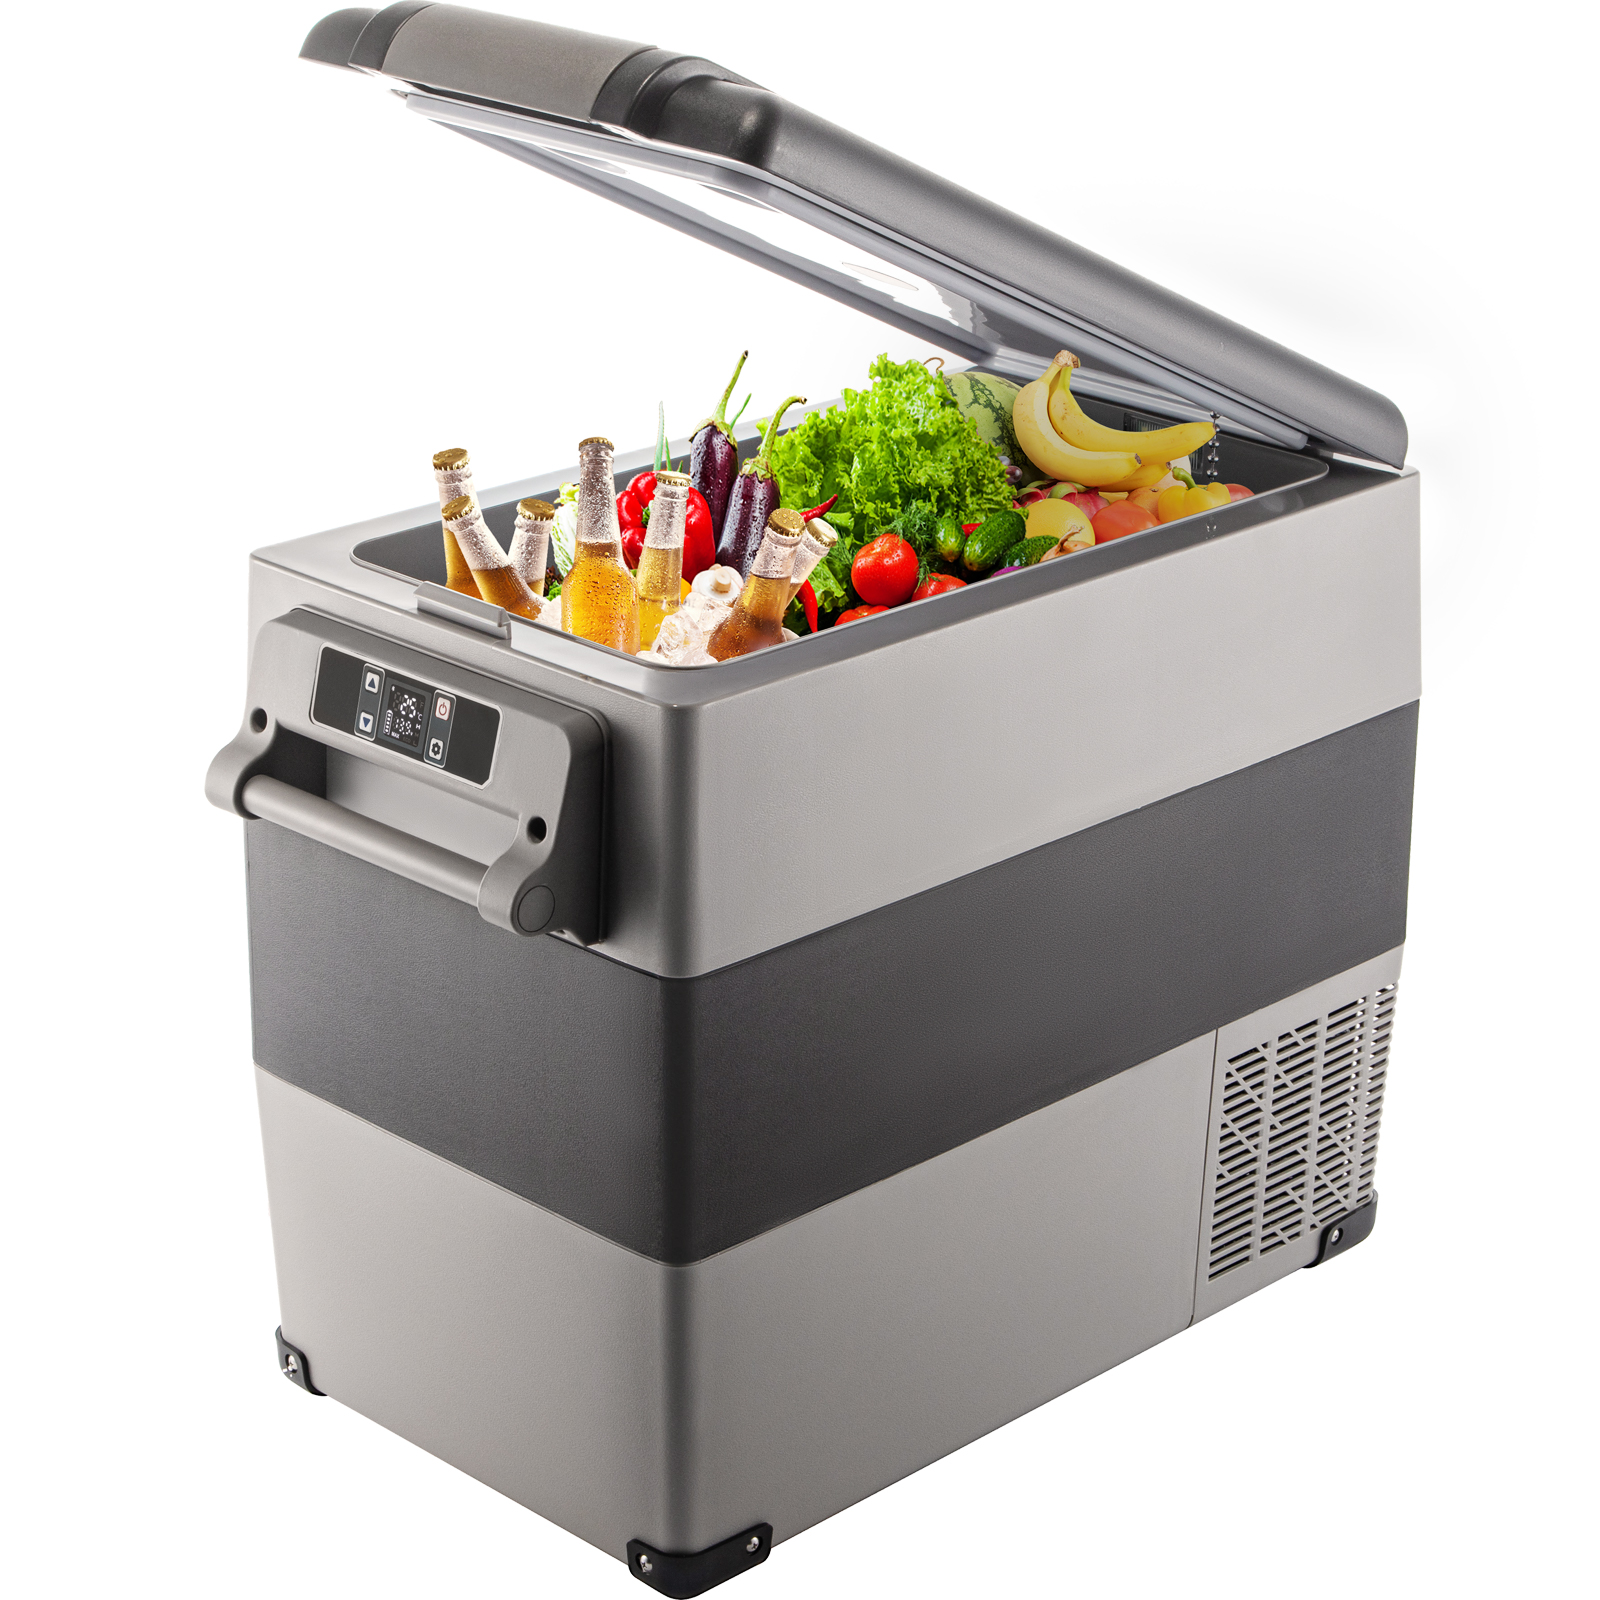 Mini-Kühlschrank kurz top-günstig: Kompressor-Kühlbox für Auto, Camping &  Co. jetzt mit 180 Euro Rabatt